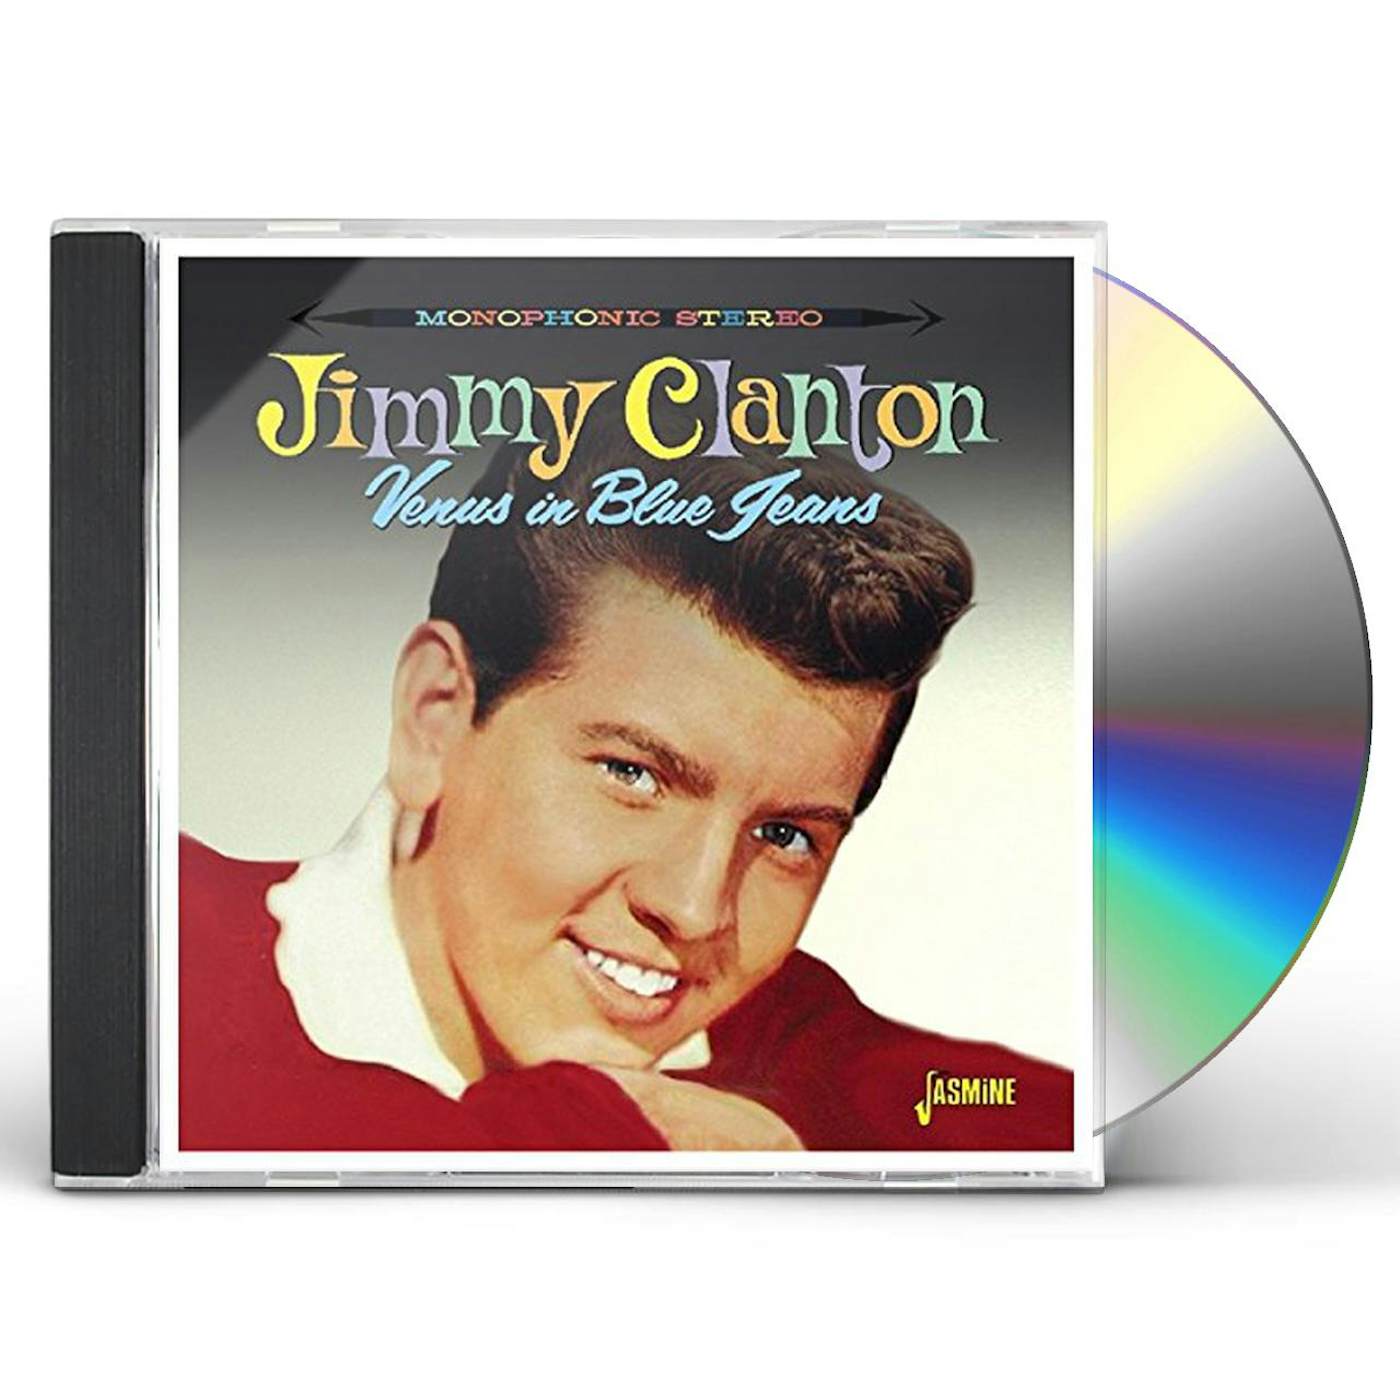 Jimmy Clanton VENUS IN BLUE JEANS CD